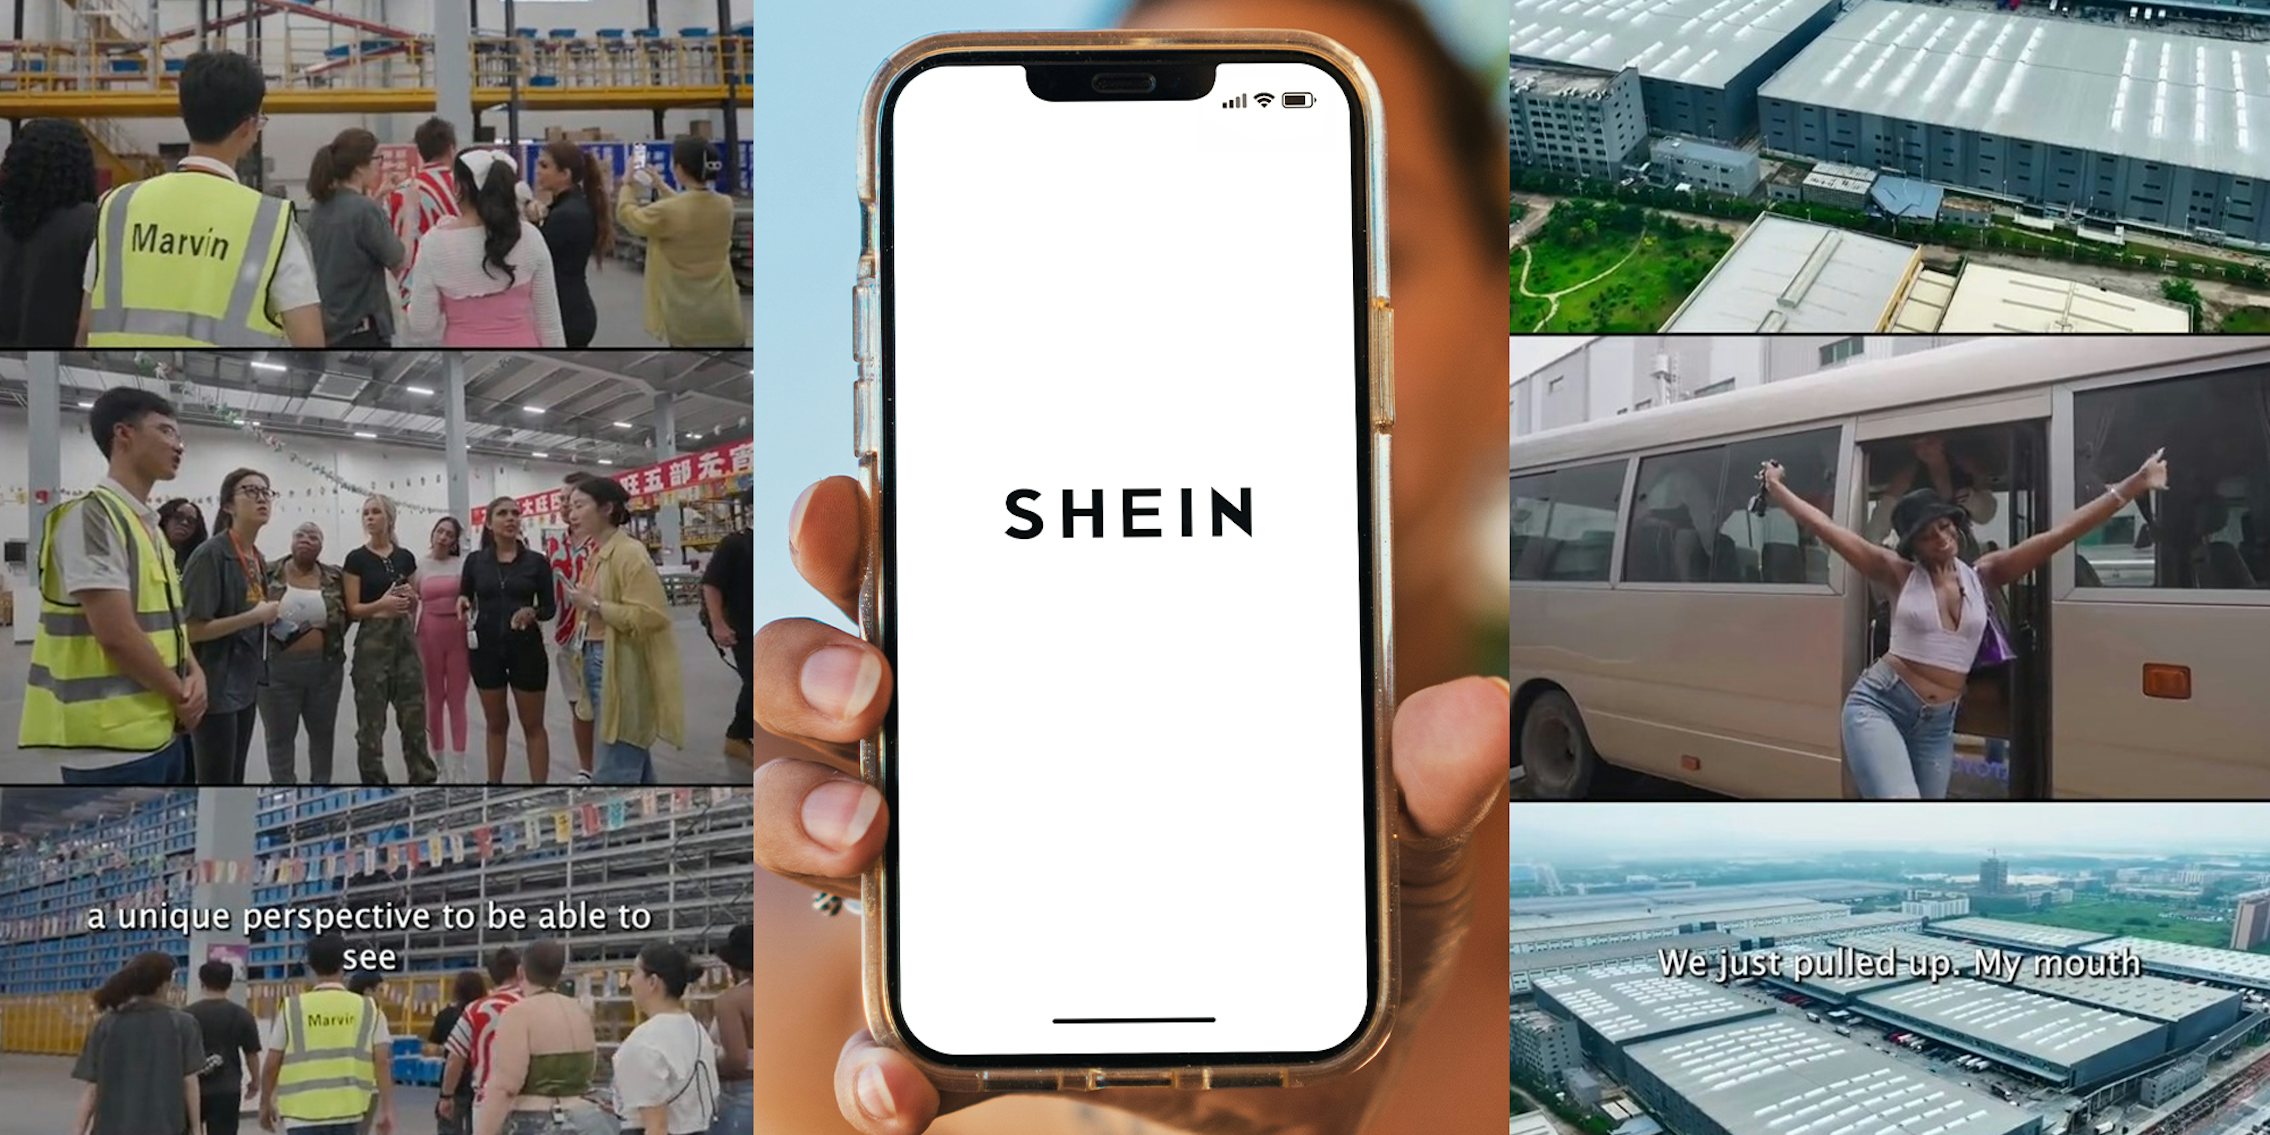 Backlash to Shein influencer trip videos